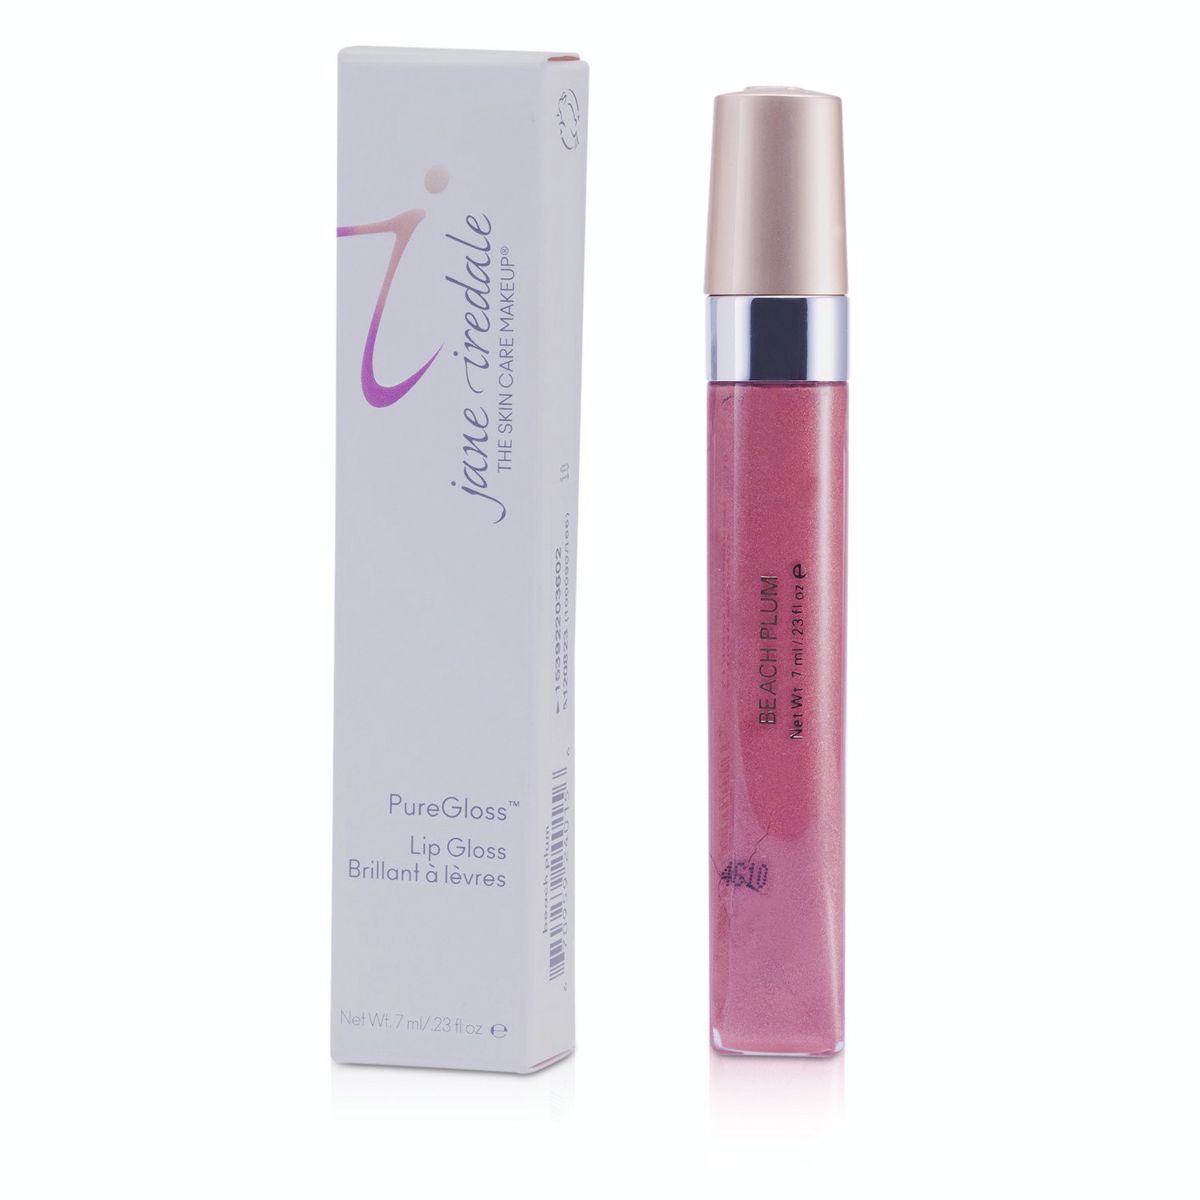 PureGloss Lip Gloss (New Packaging) - Beach Plum Jane Iredale Image